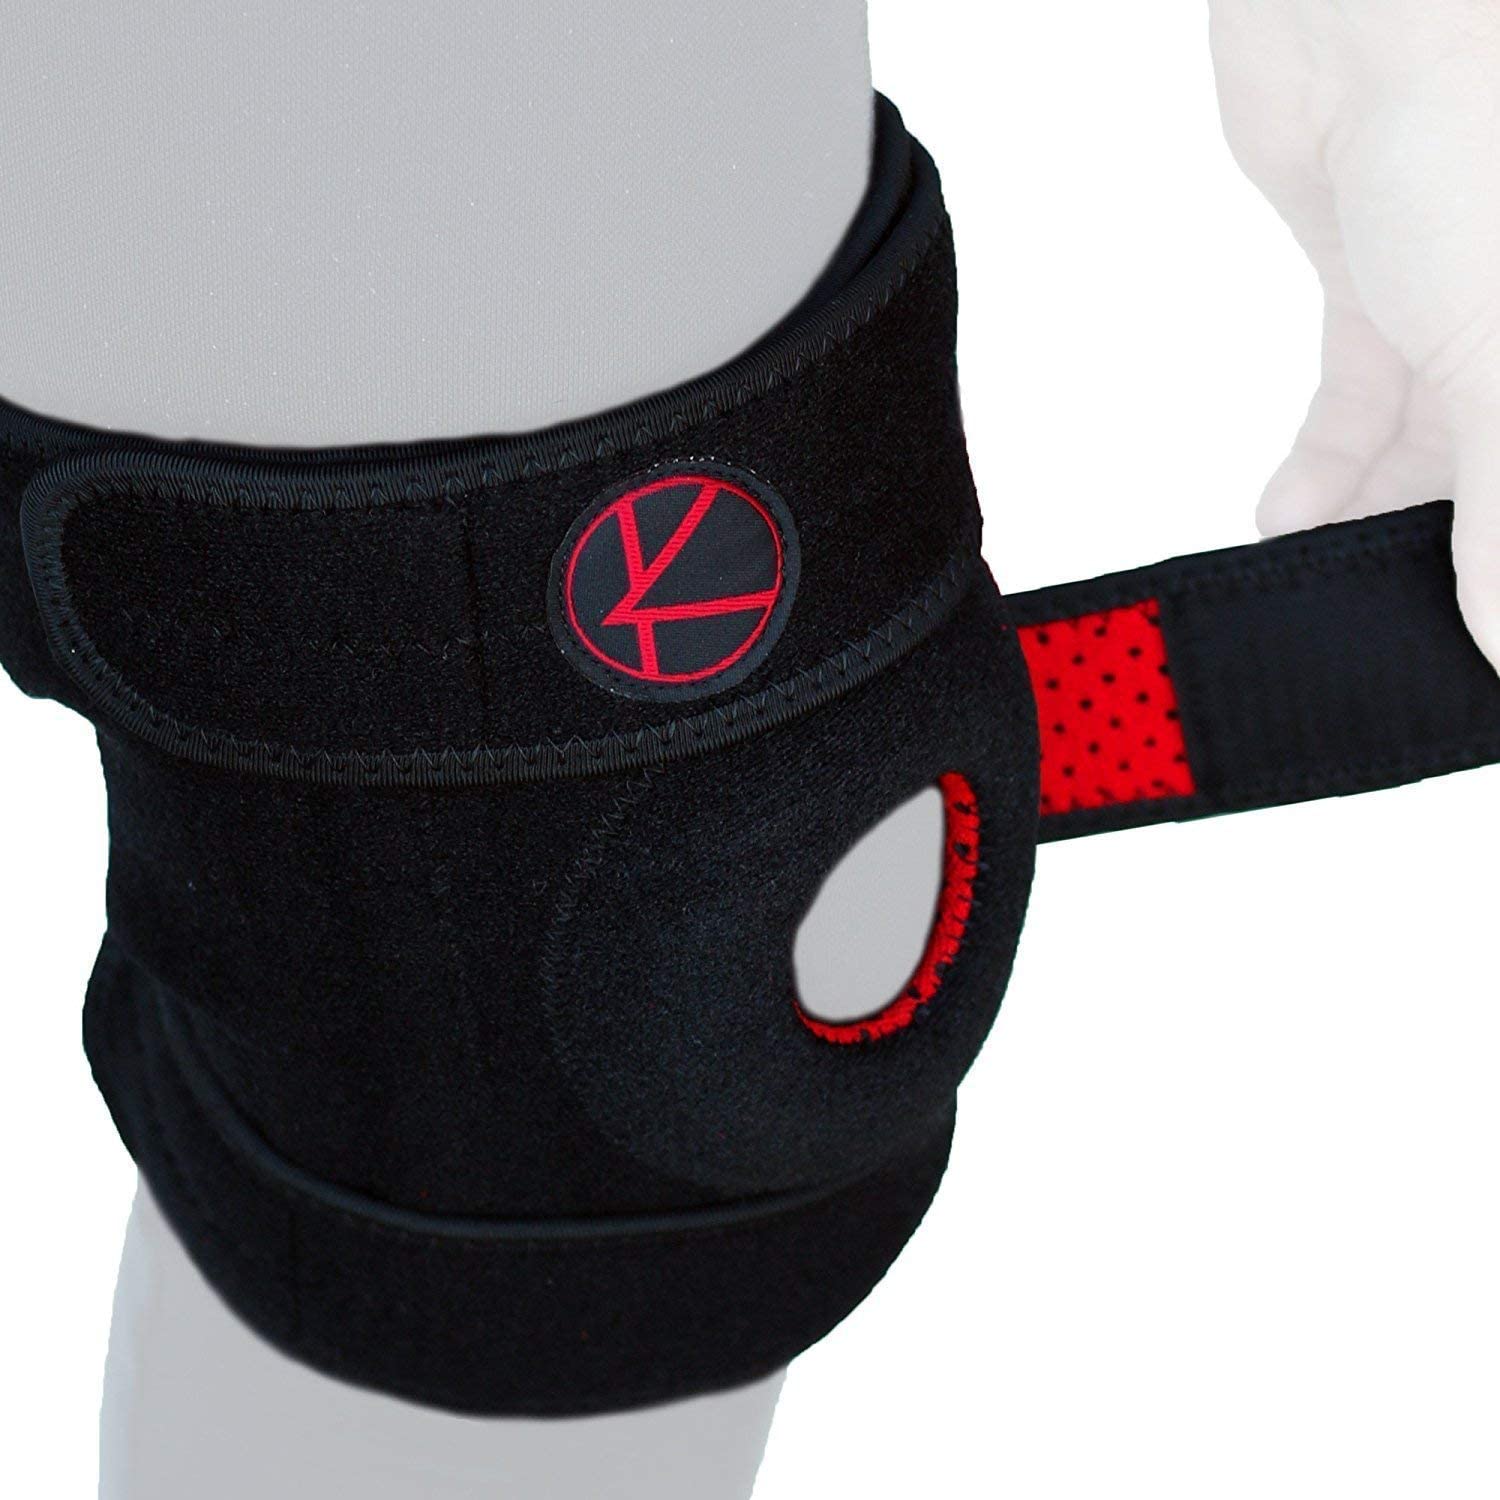 Joint Pain Arthritis Knee Brace Support Compression Sleeve Strap Plus Size  XXXL